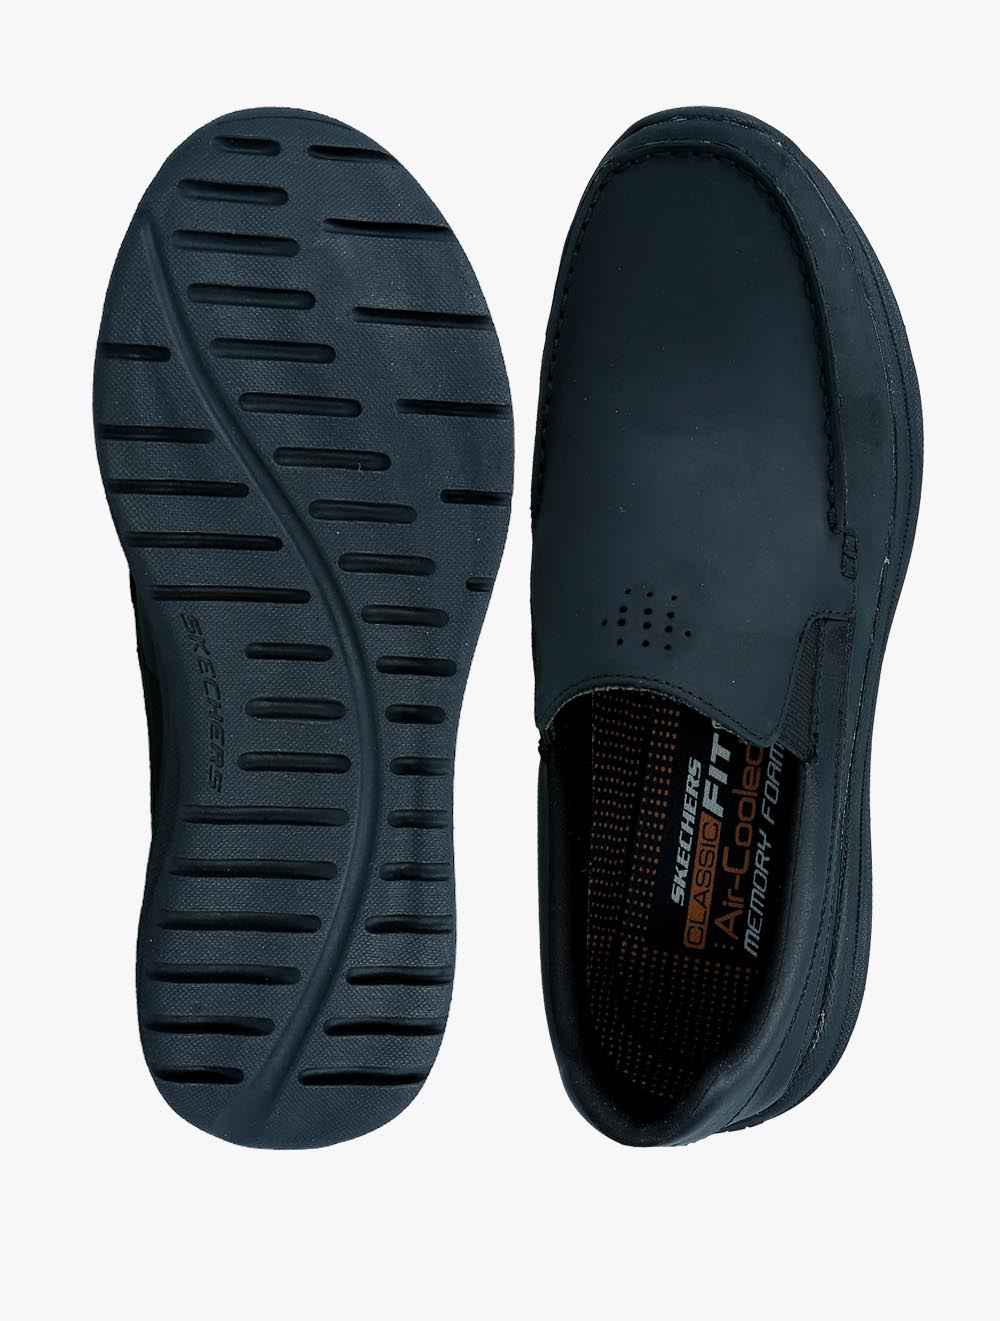 zapatos skechers classica 2015